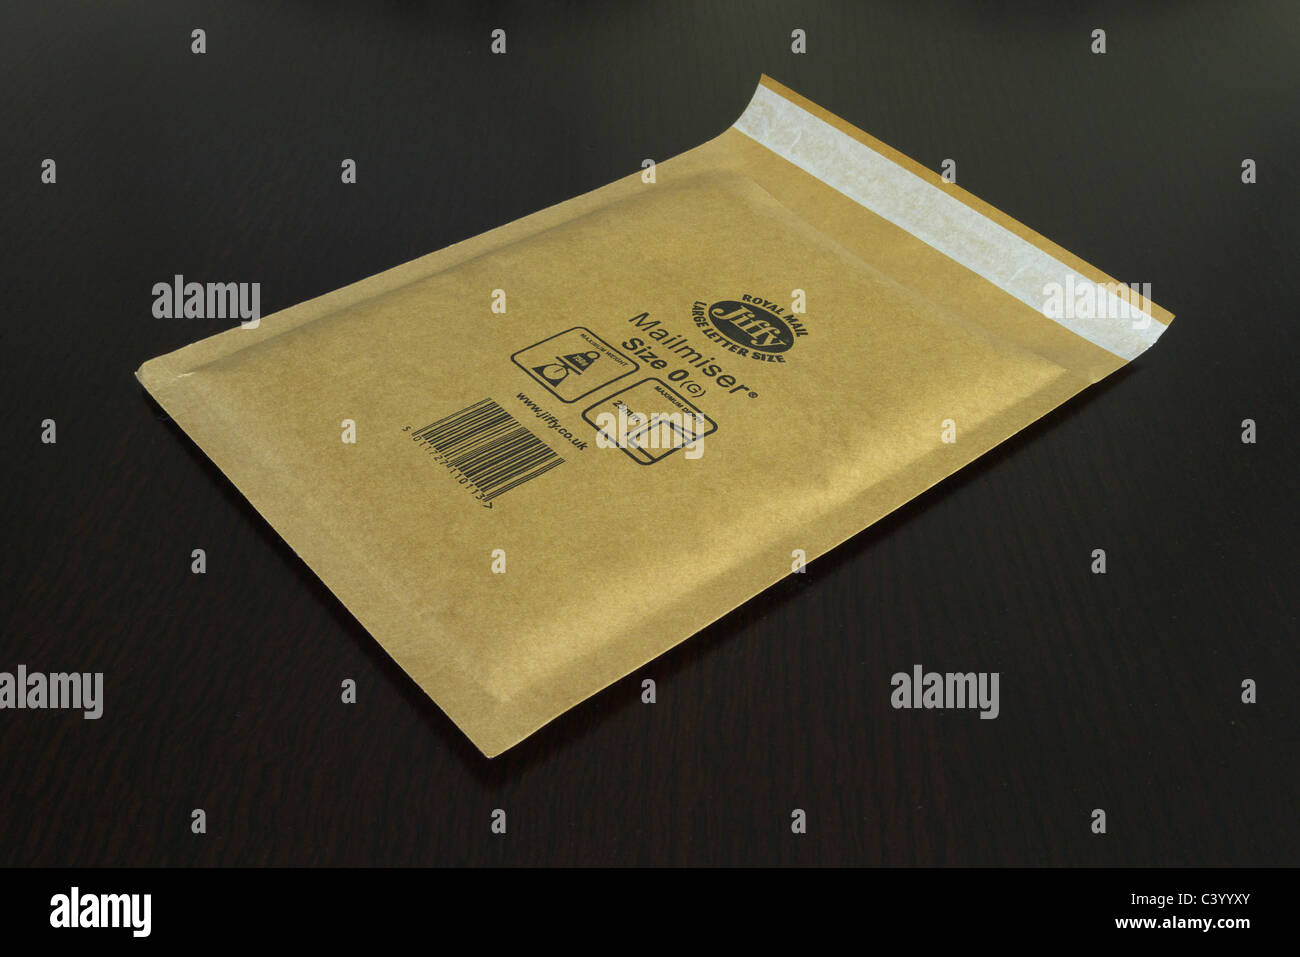 Jiffy Padded Envelope on a dark background Stock Photo